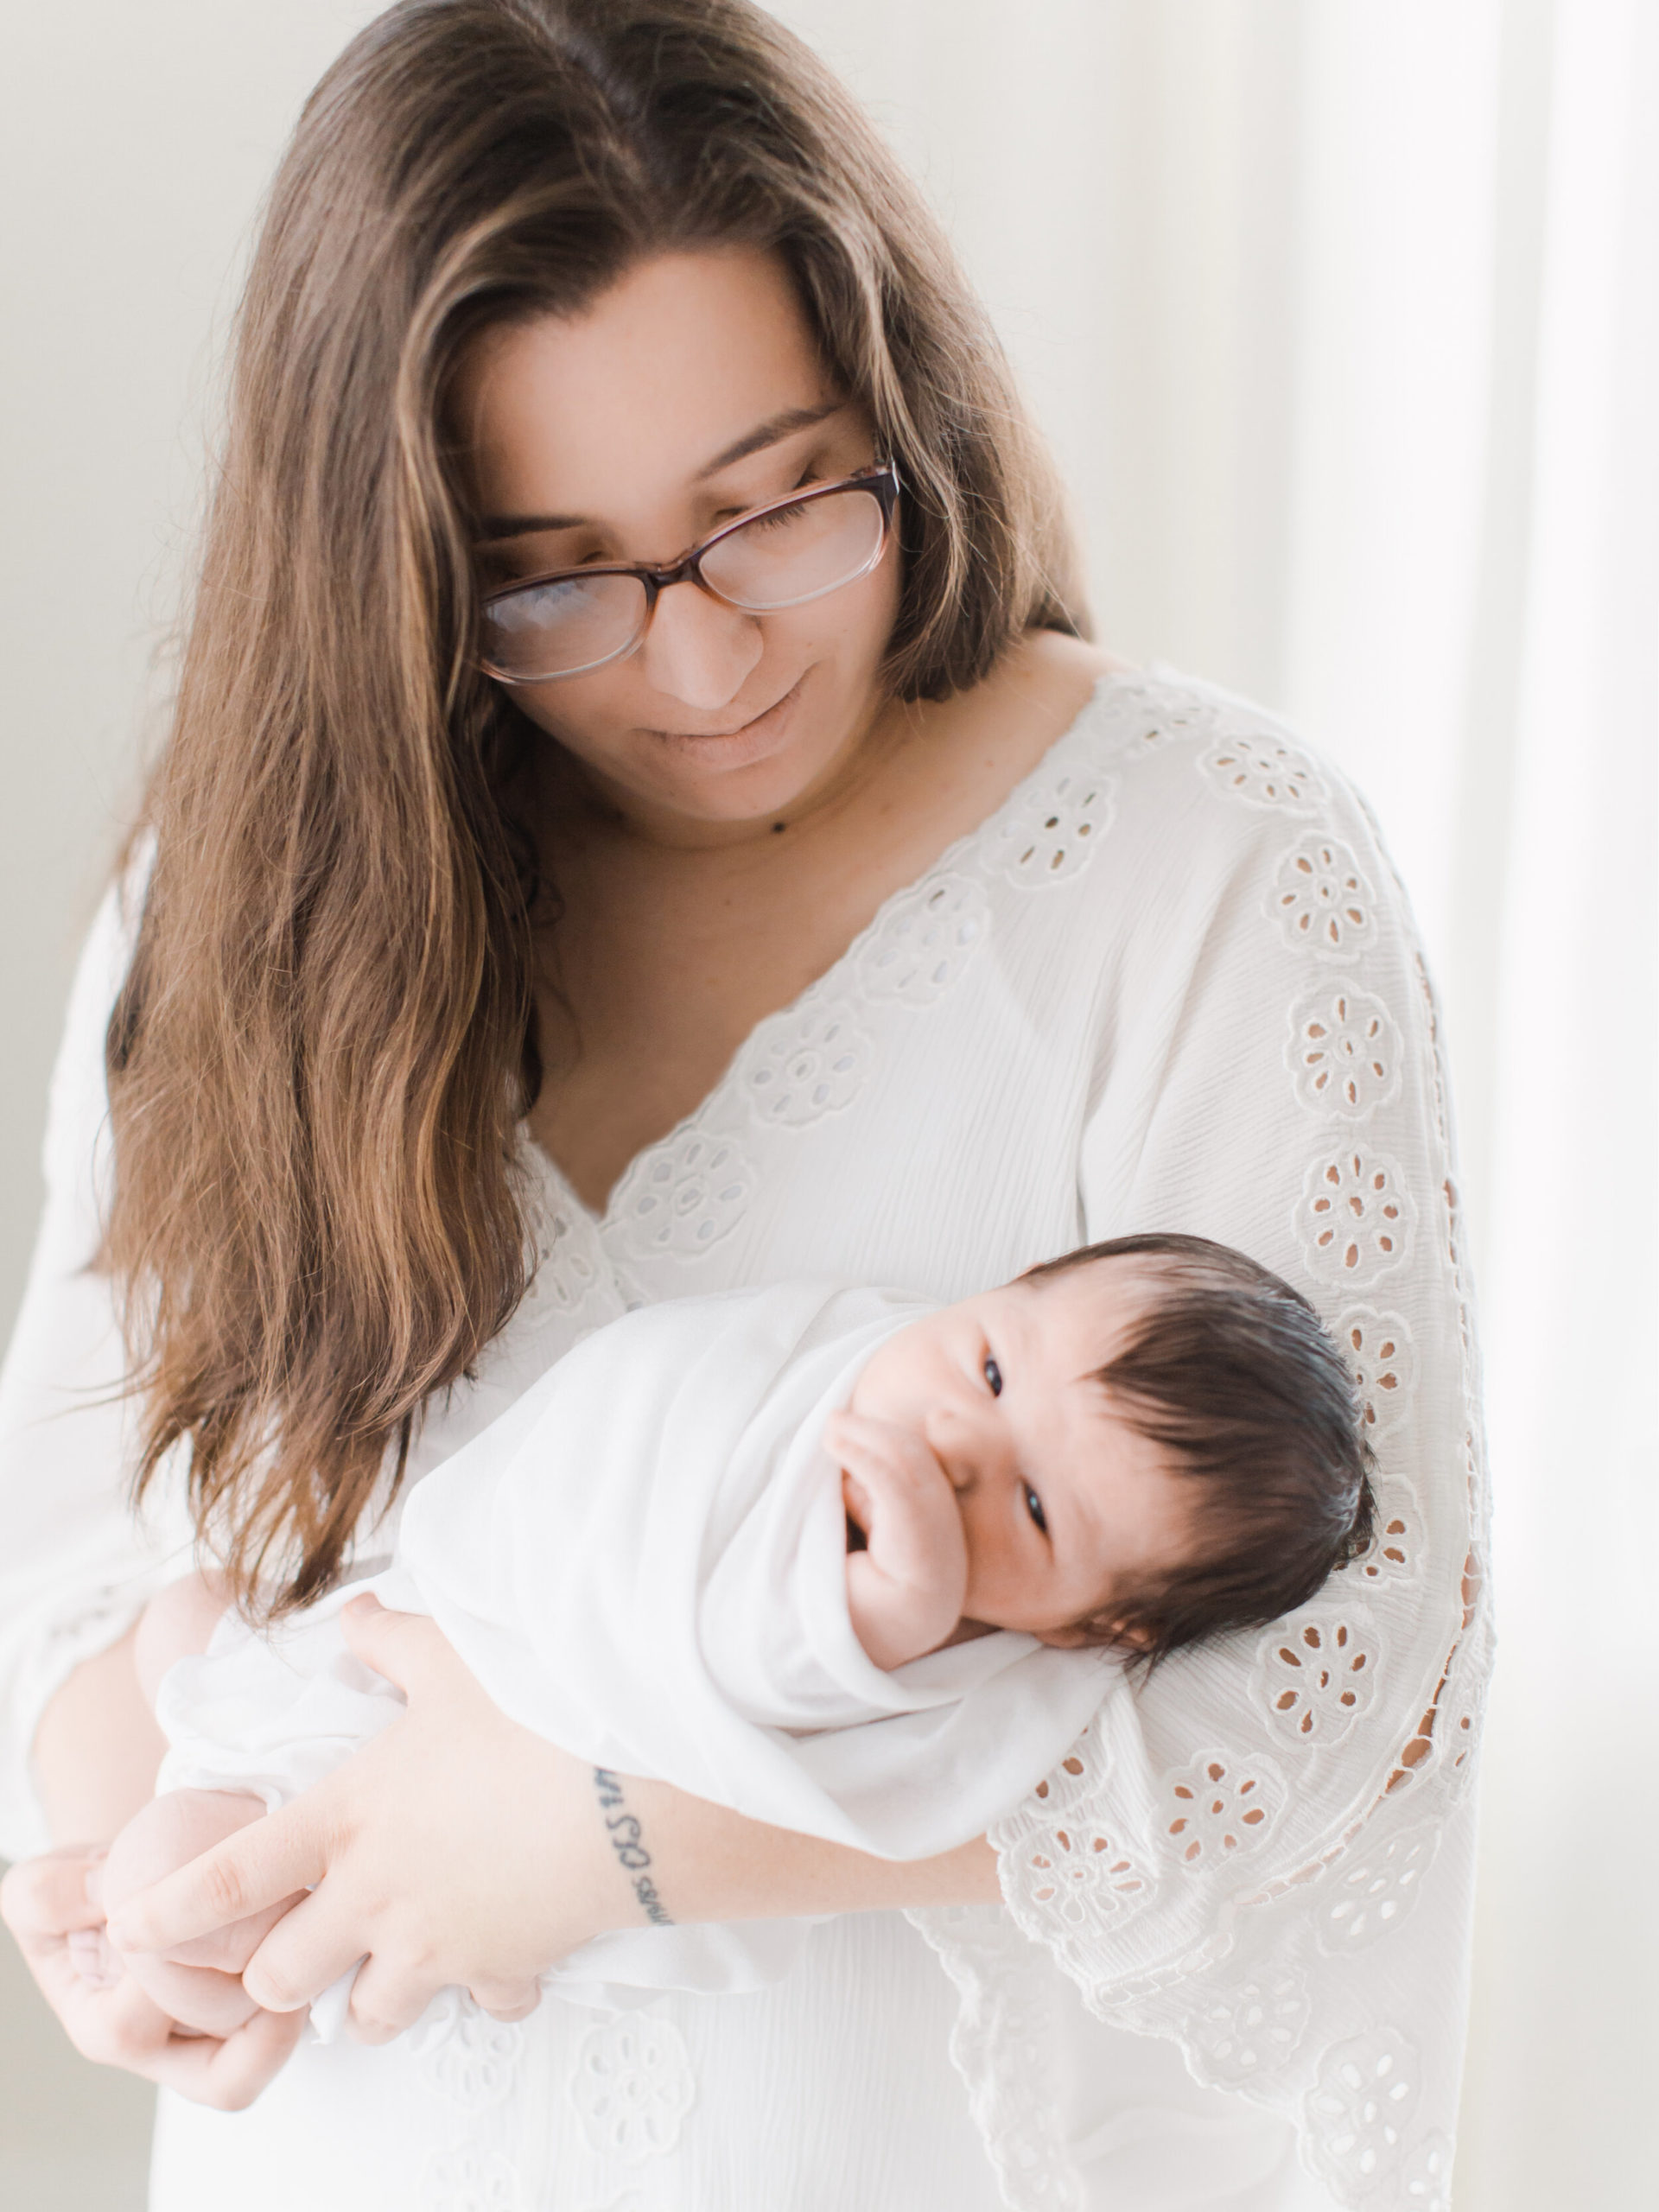 Mom with newborn baby in Bentonville AR photography studio